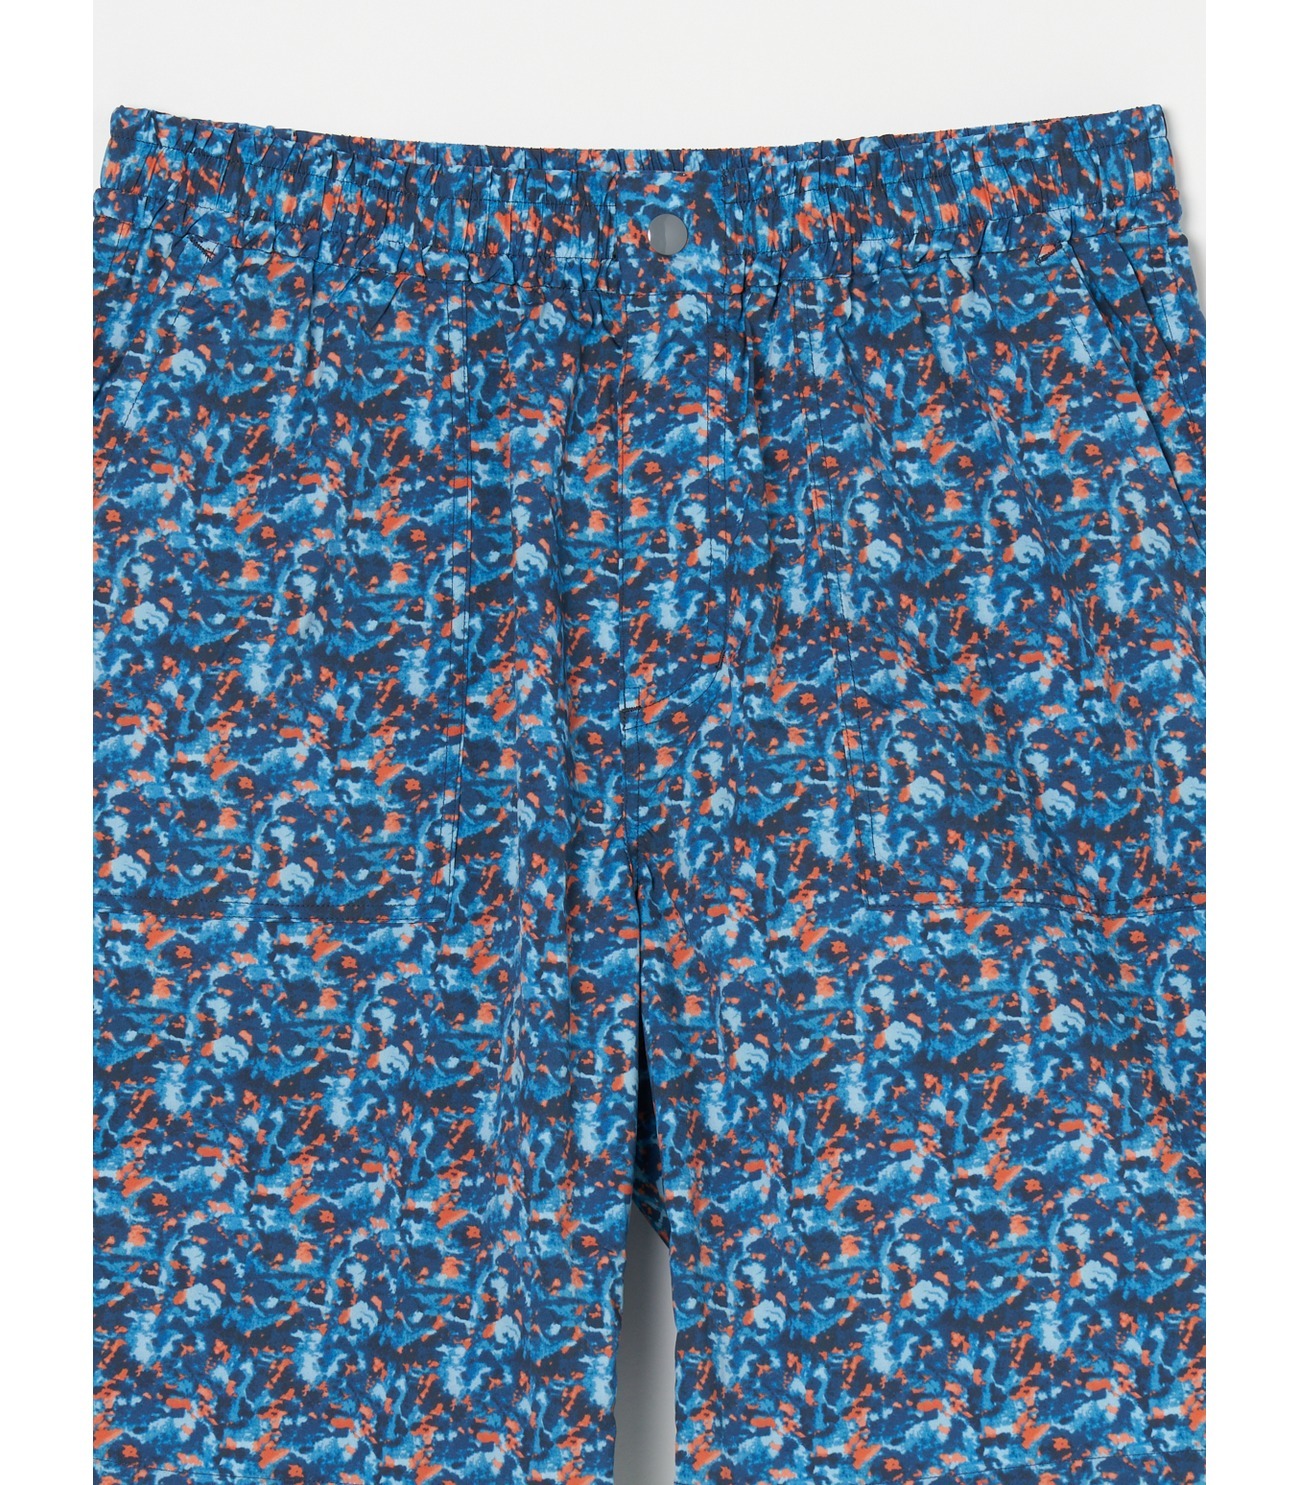 Unisex blue marble shorts 詳細画像 blue multi 2